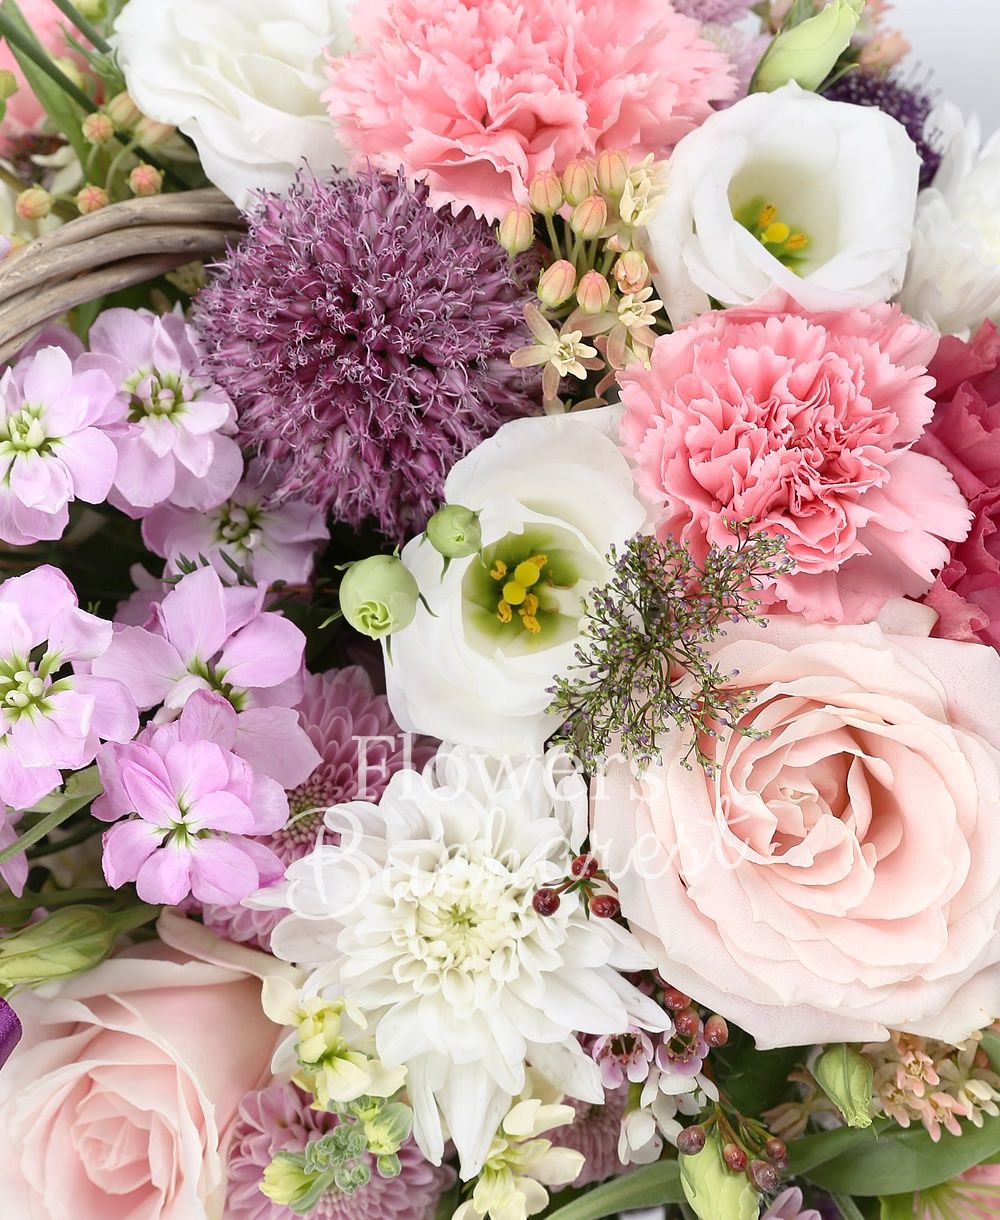 5 matthiola, 5 roses, 5 pink santini, 7 pink carnations, 5 mauve trachelium, 5 pink hypericum, 3 pink lisianthus, white lily, greenery